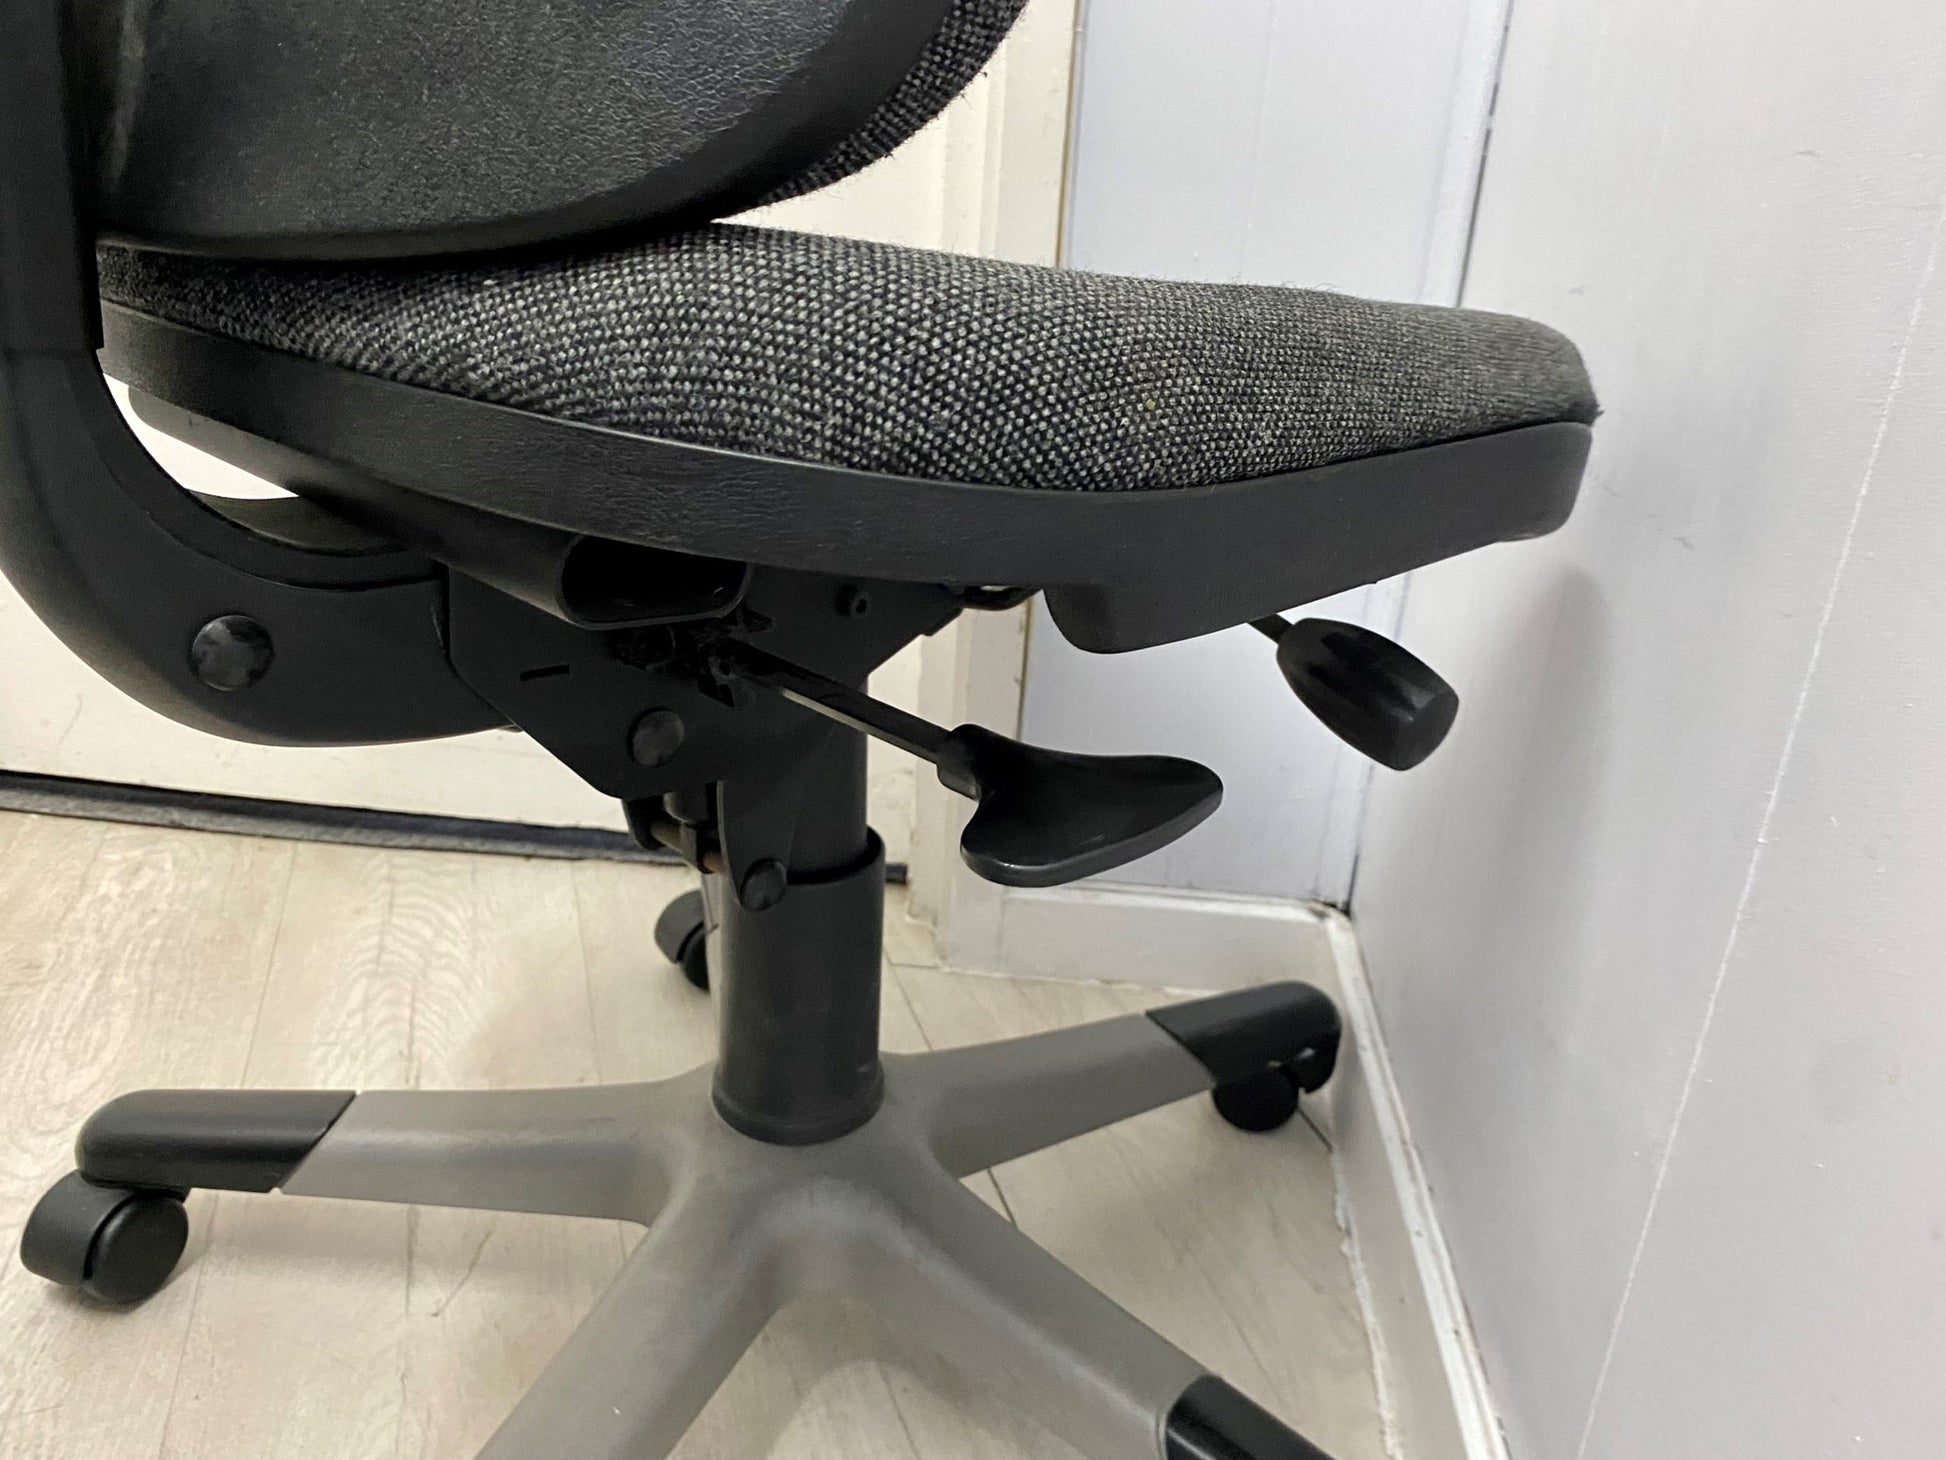 Base ergonomic adjustable lever chair in grey